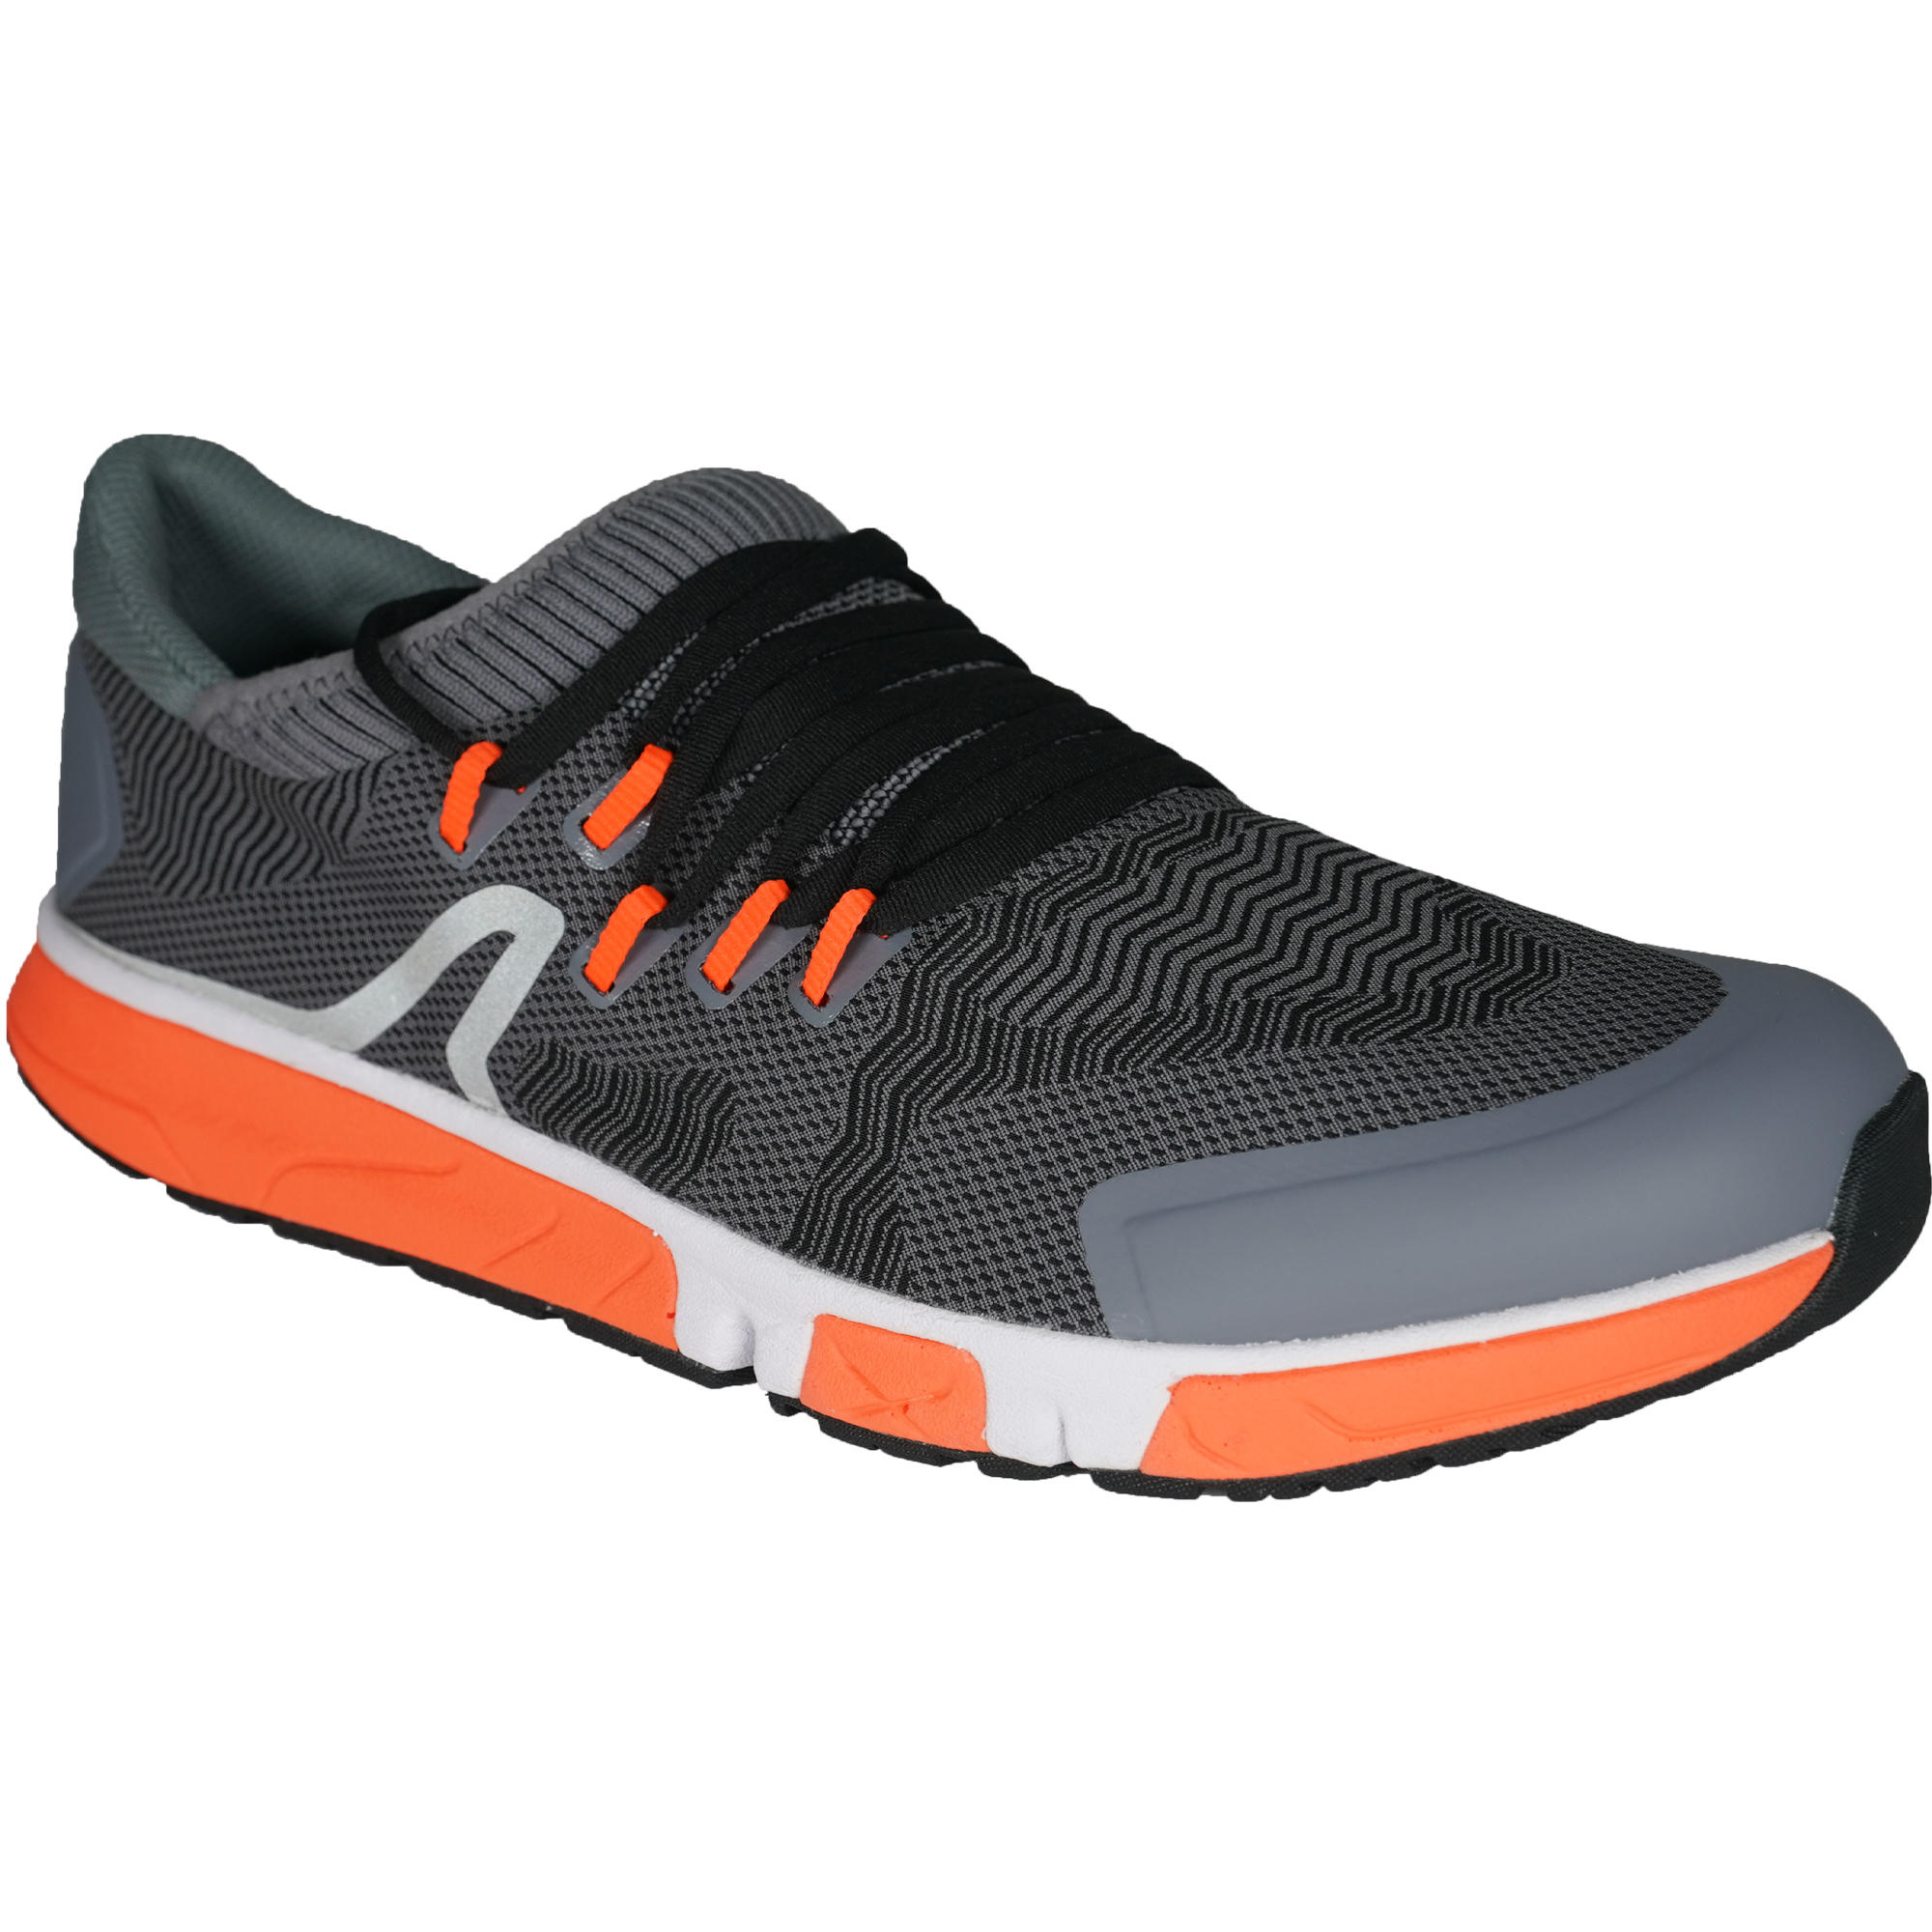 RW 900 long-distance fitness walking shoes - grey/orange 1/12